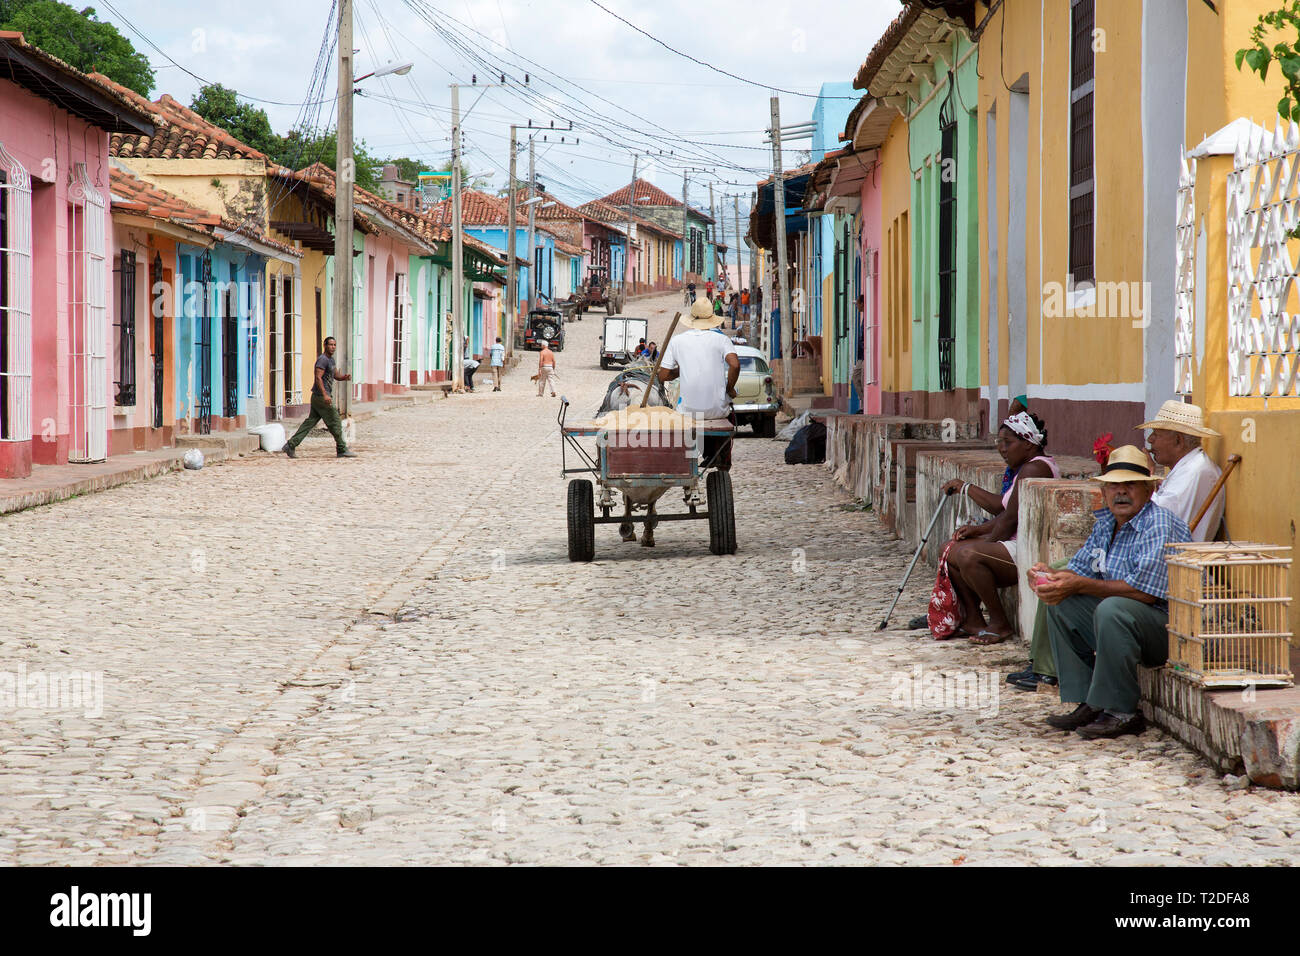 Street scene Trinidad,Cuba Stock Photo